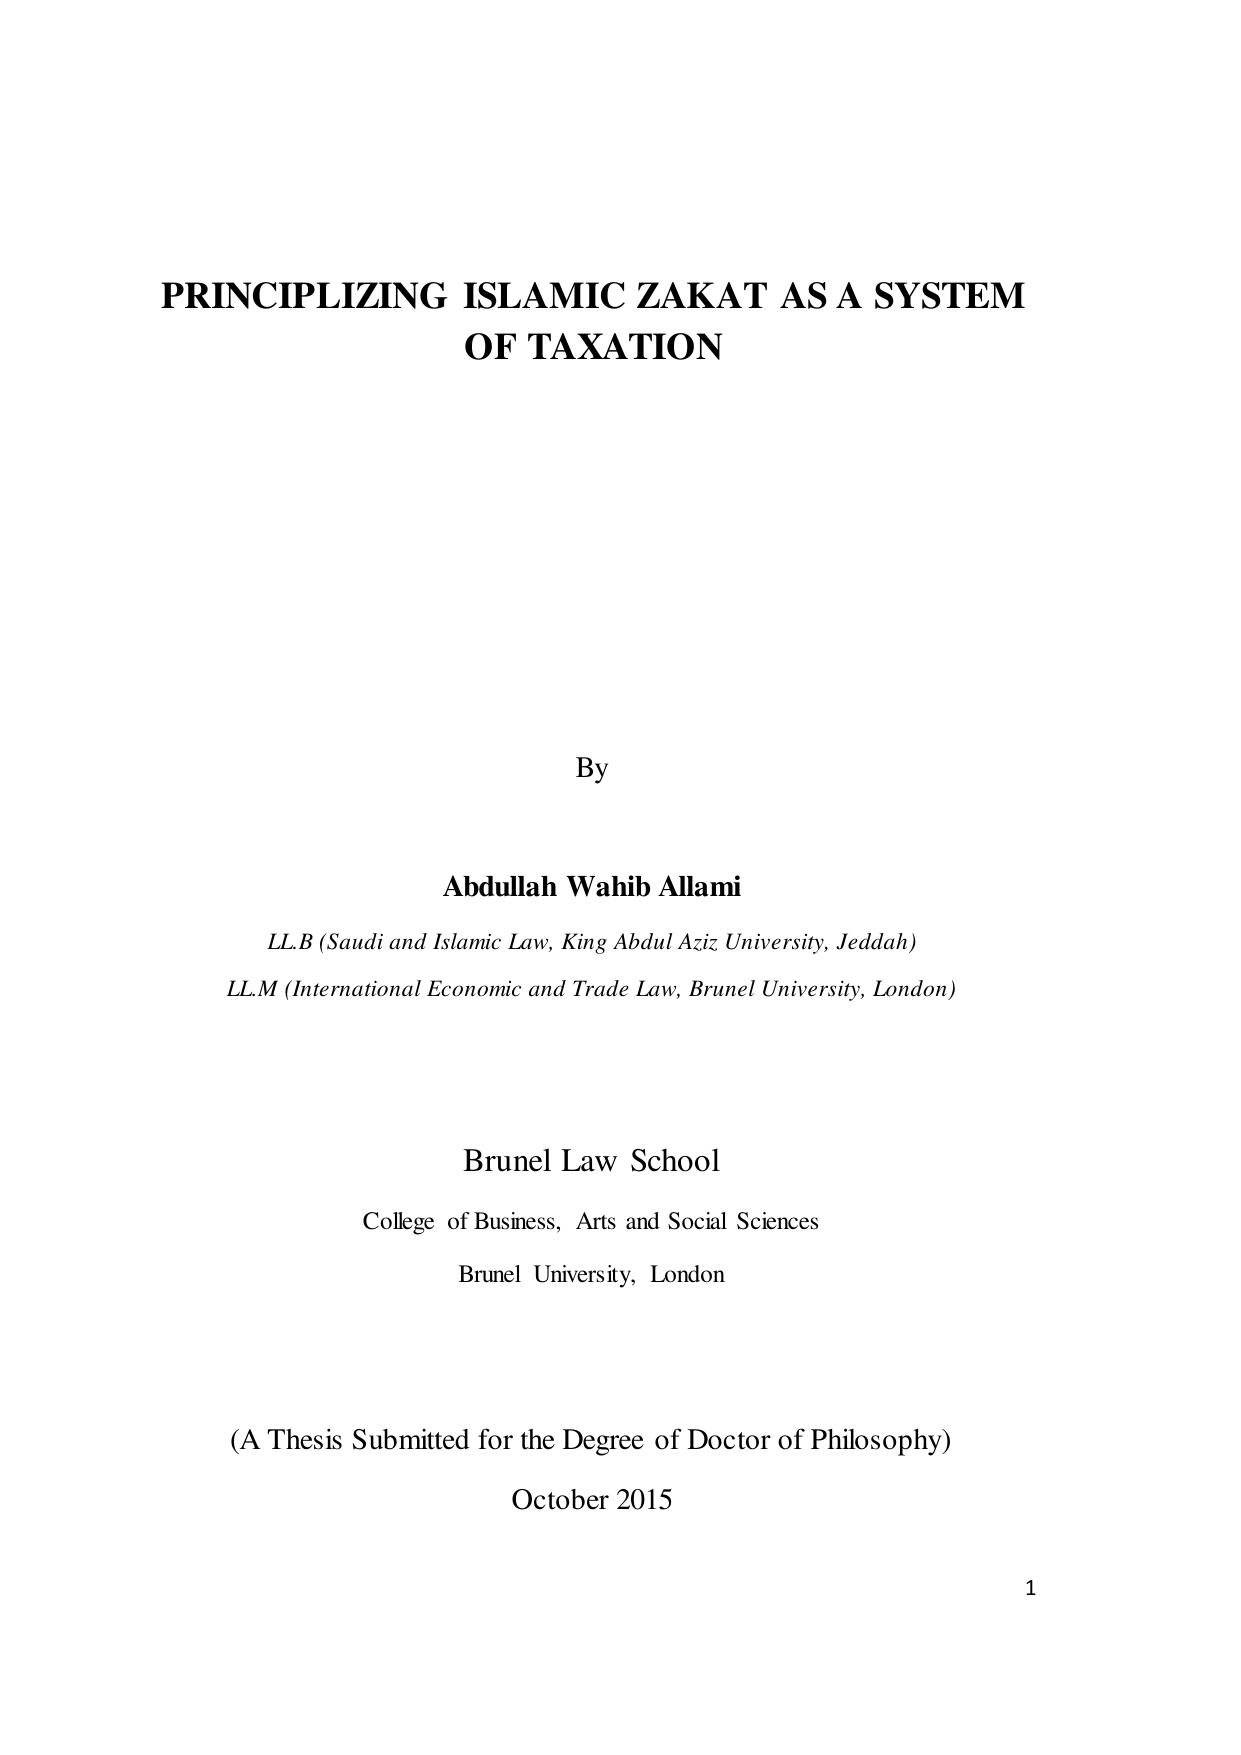 Principlizing Islamic Zakat as a System, 2015